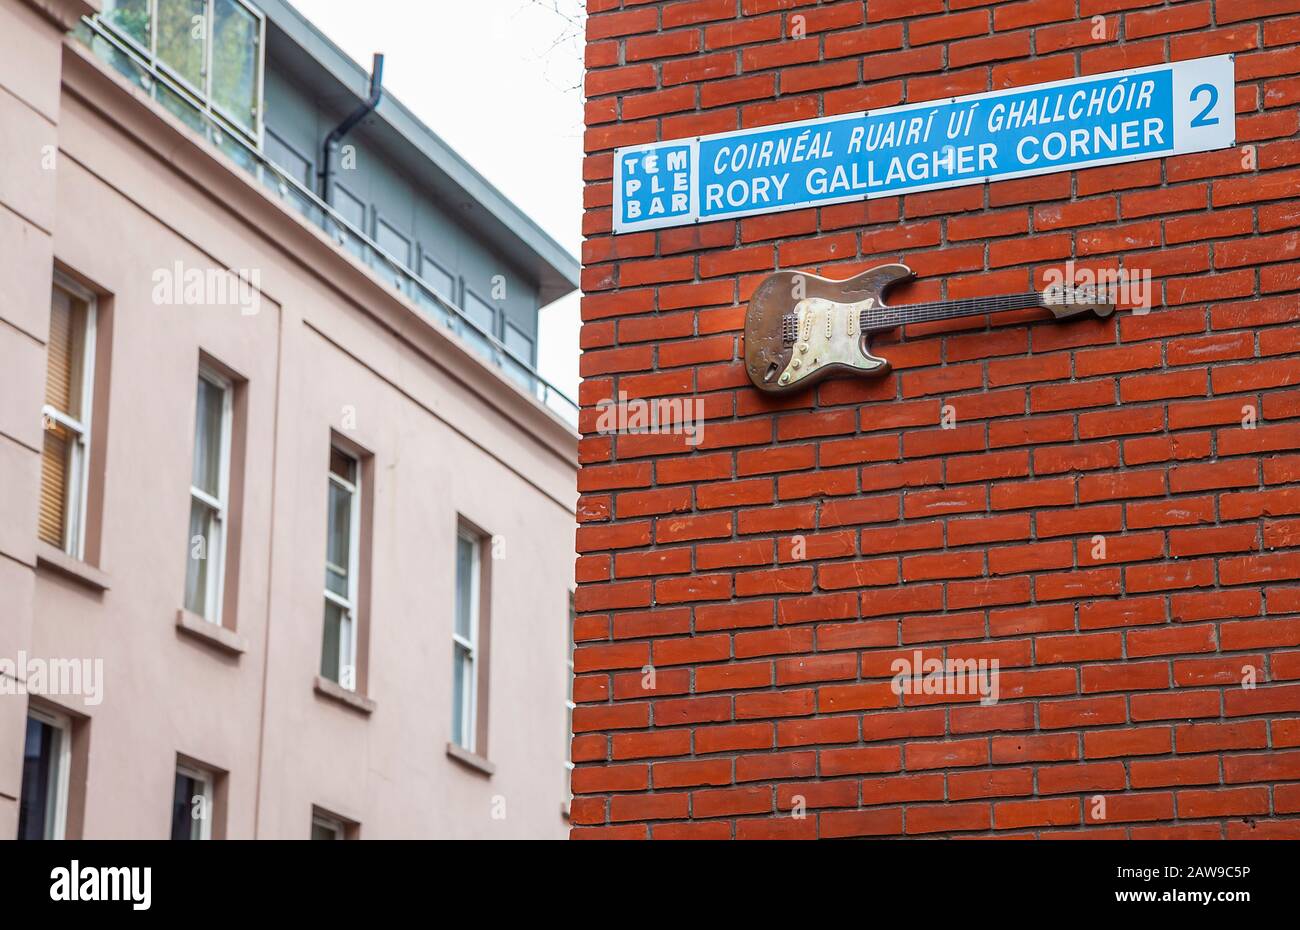 Rory Gallagher Corner (Coirneal Ruairi uf Ghallchoir), Dublin, Ireland Stock Photo